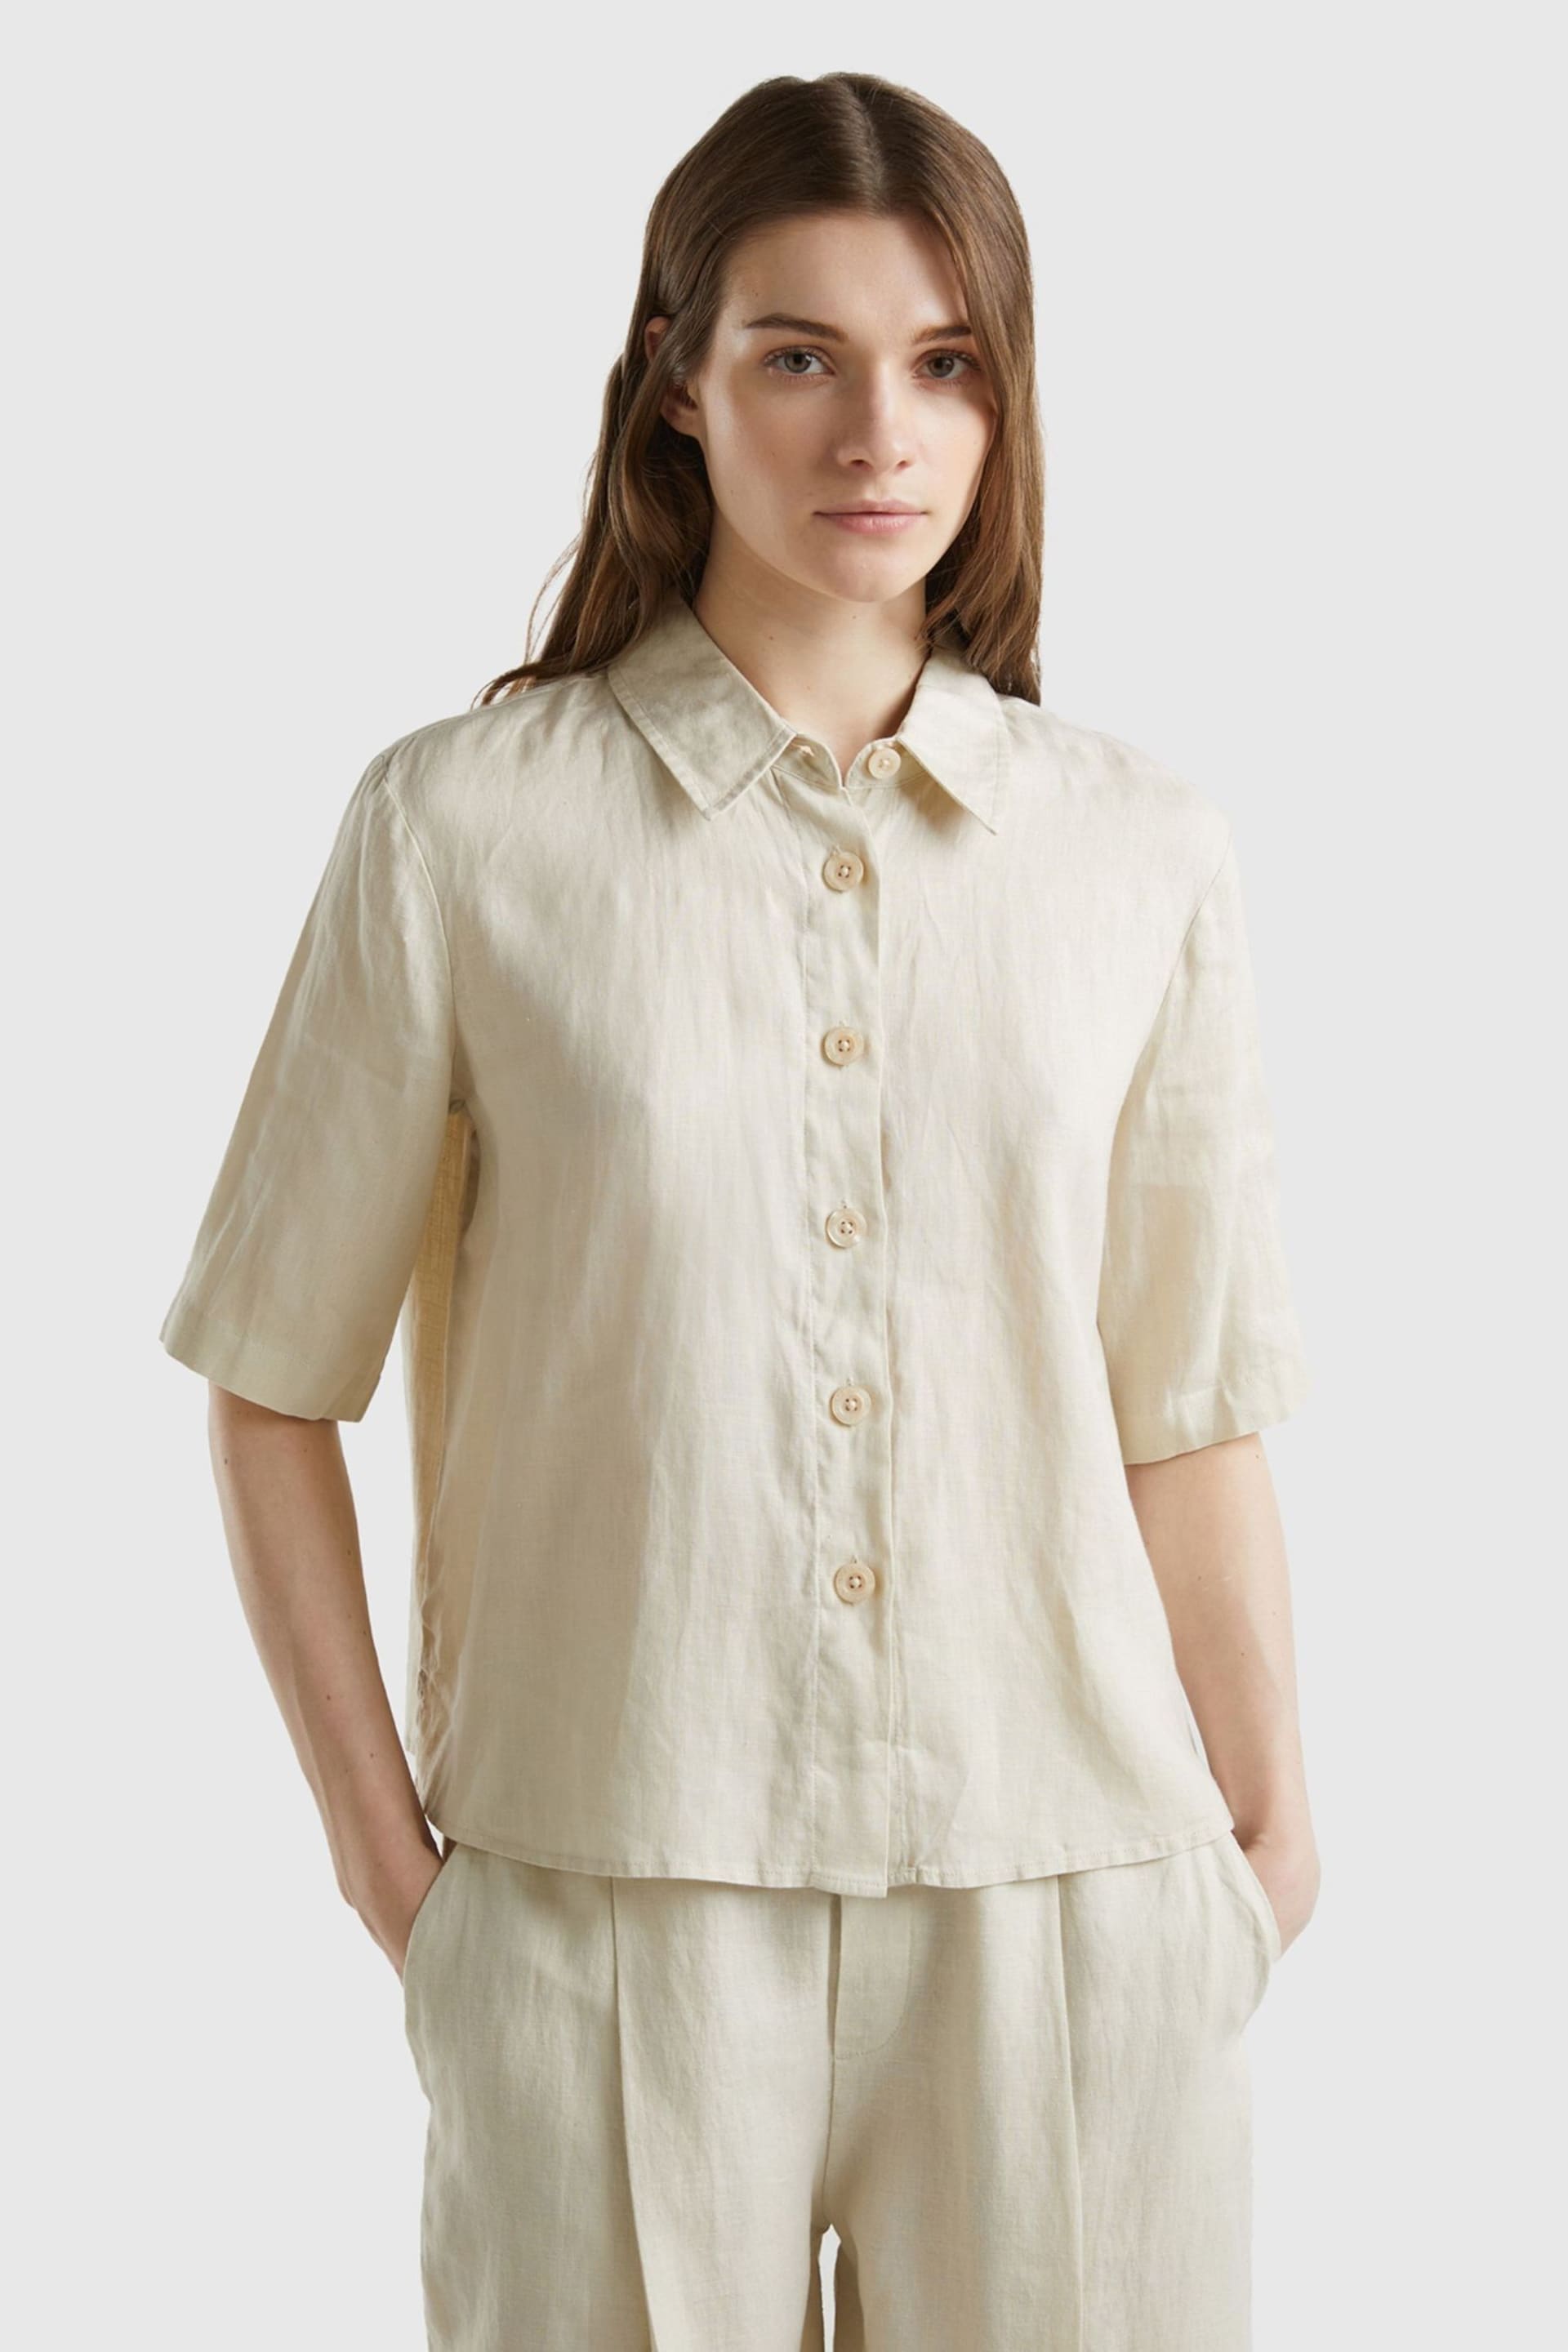 Benetton Linen Shirt - Image 1 of 3